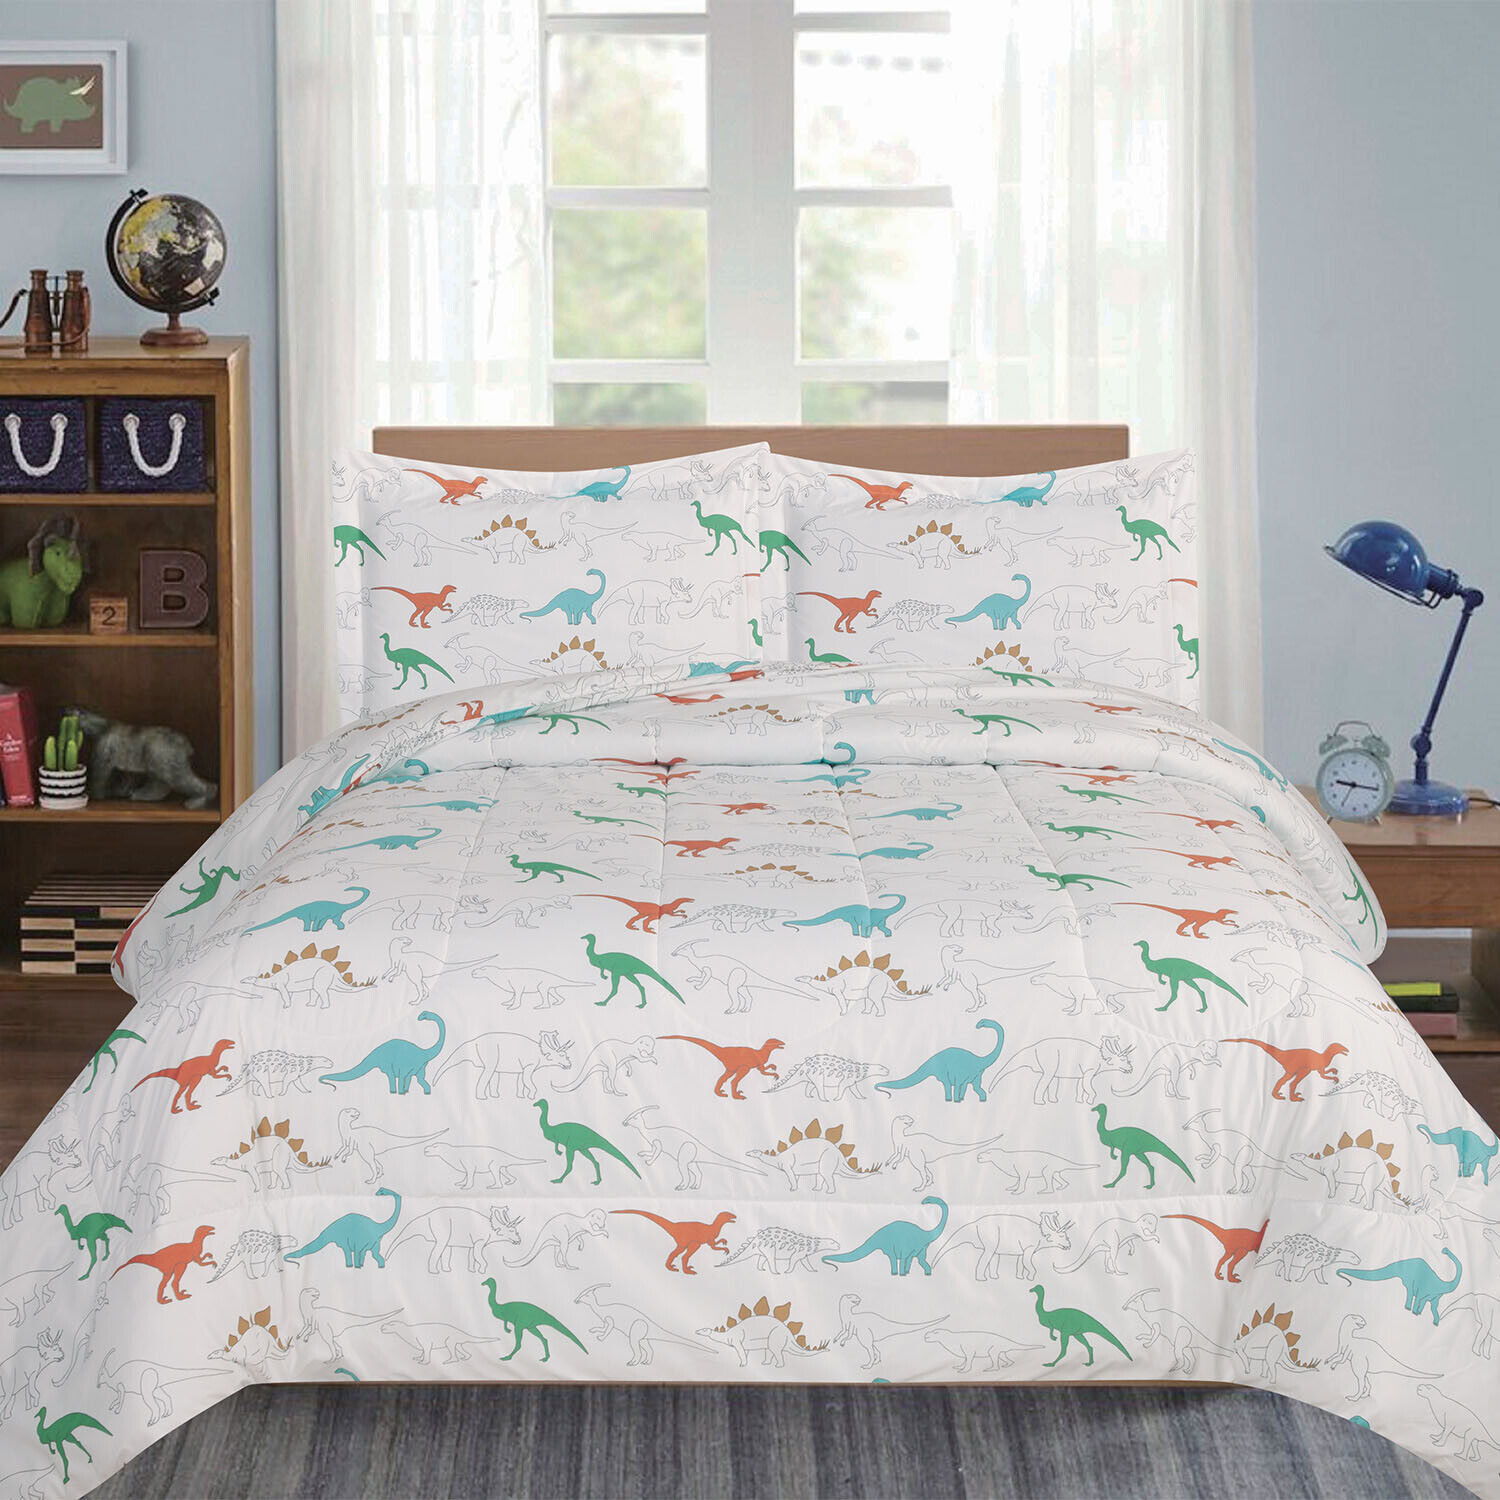 Colorful Dinosaur Comforter Set for Kids